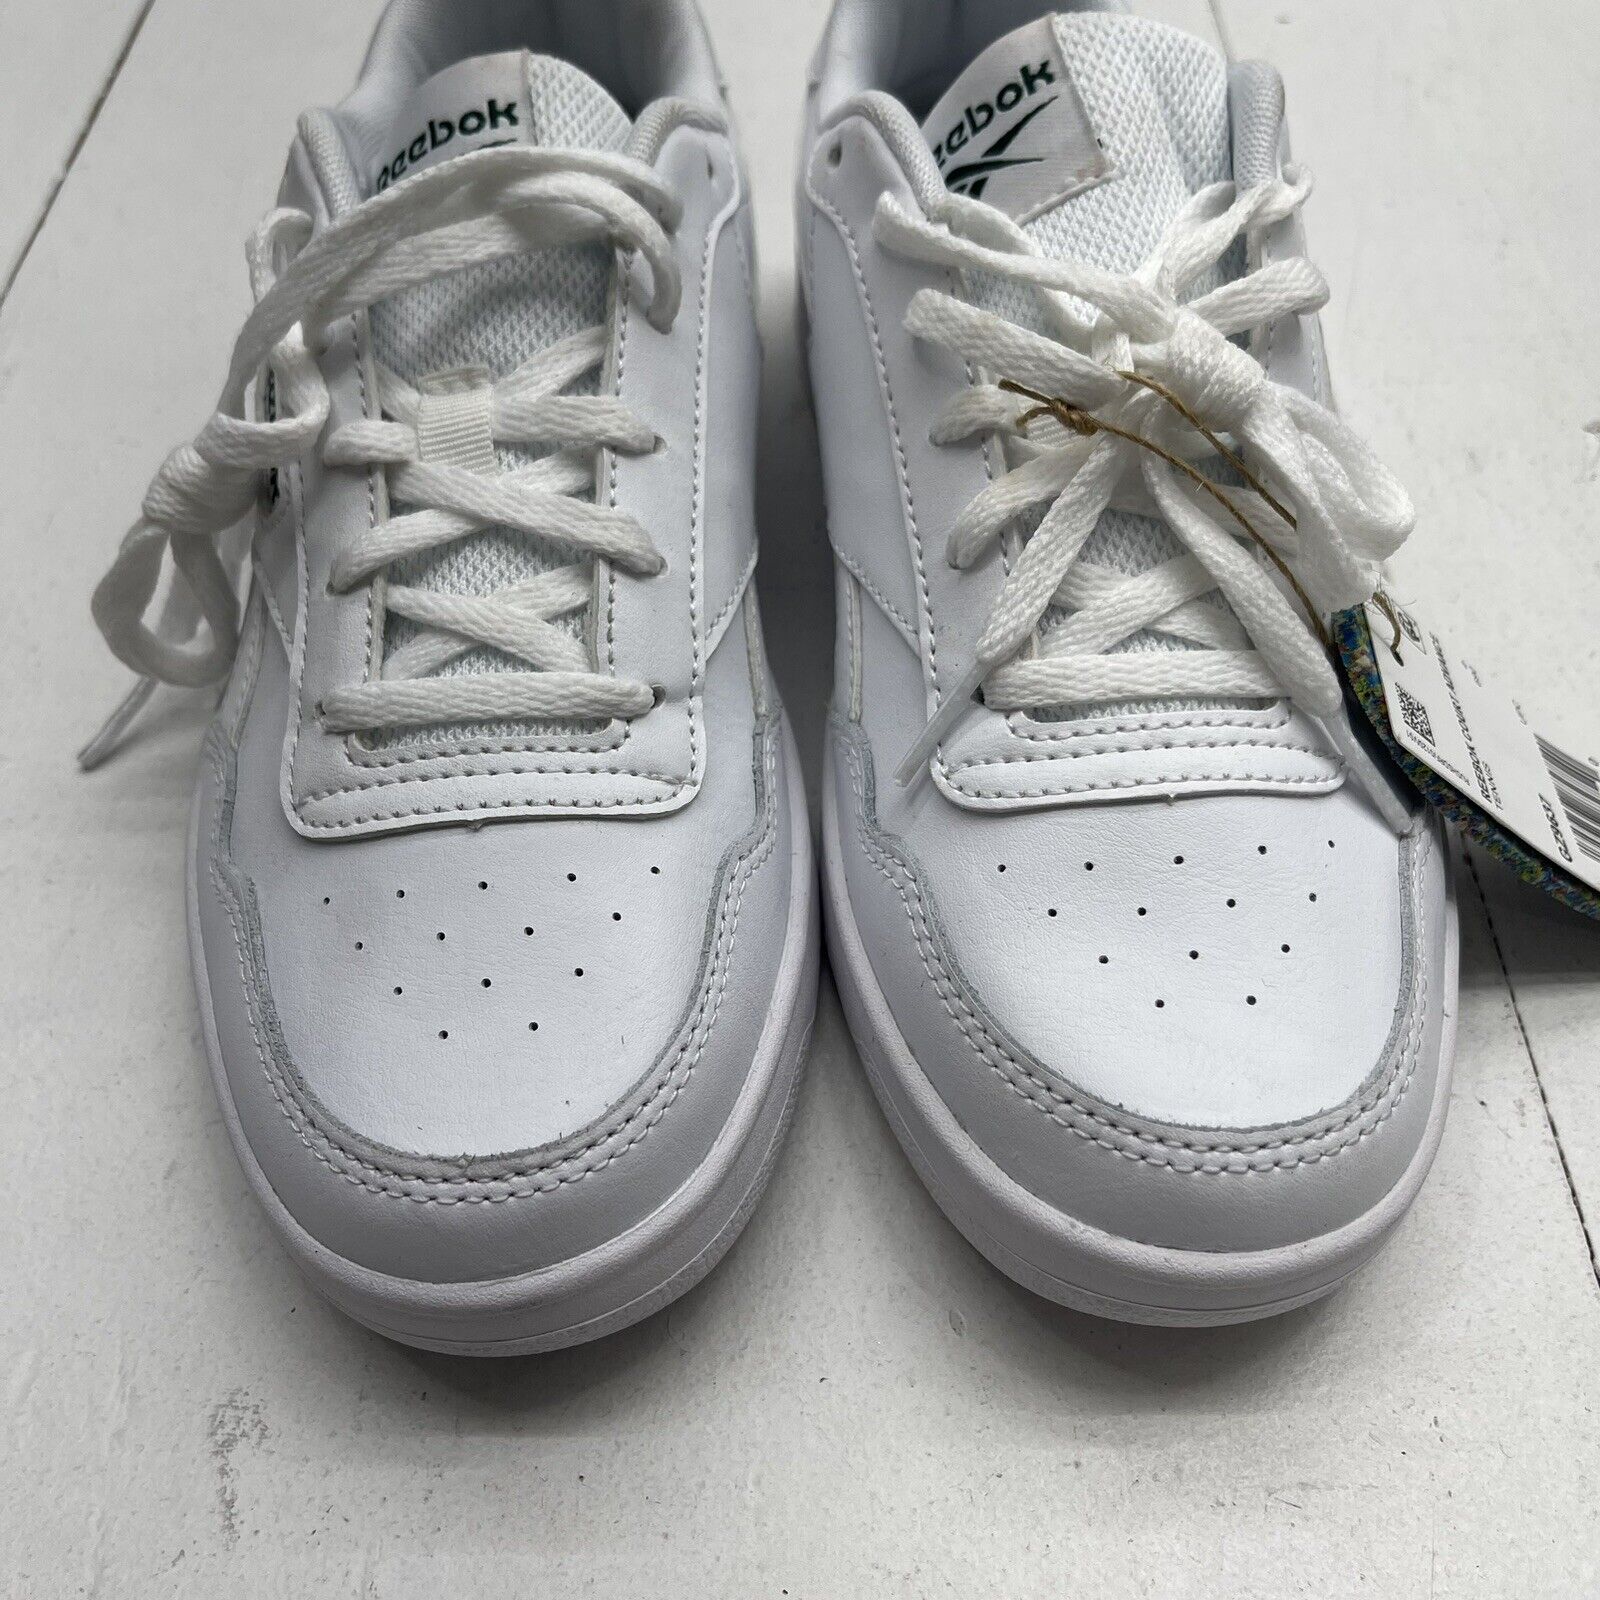 Reebok Court Advance White Sneakers Size 7 Defect - beyond